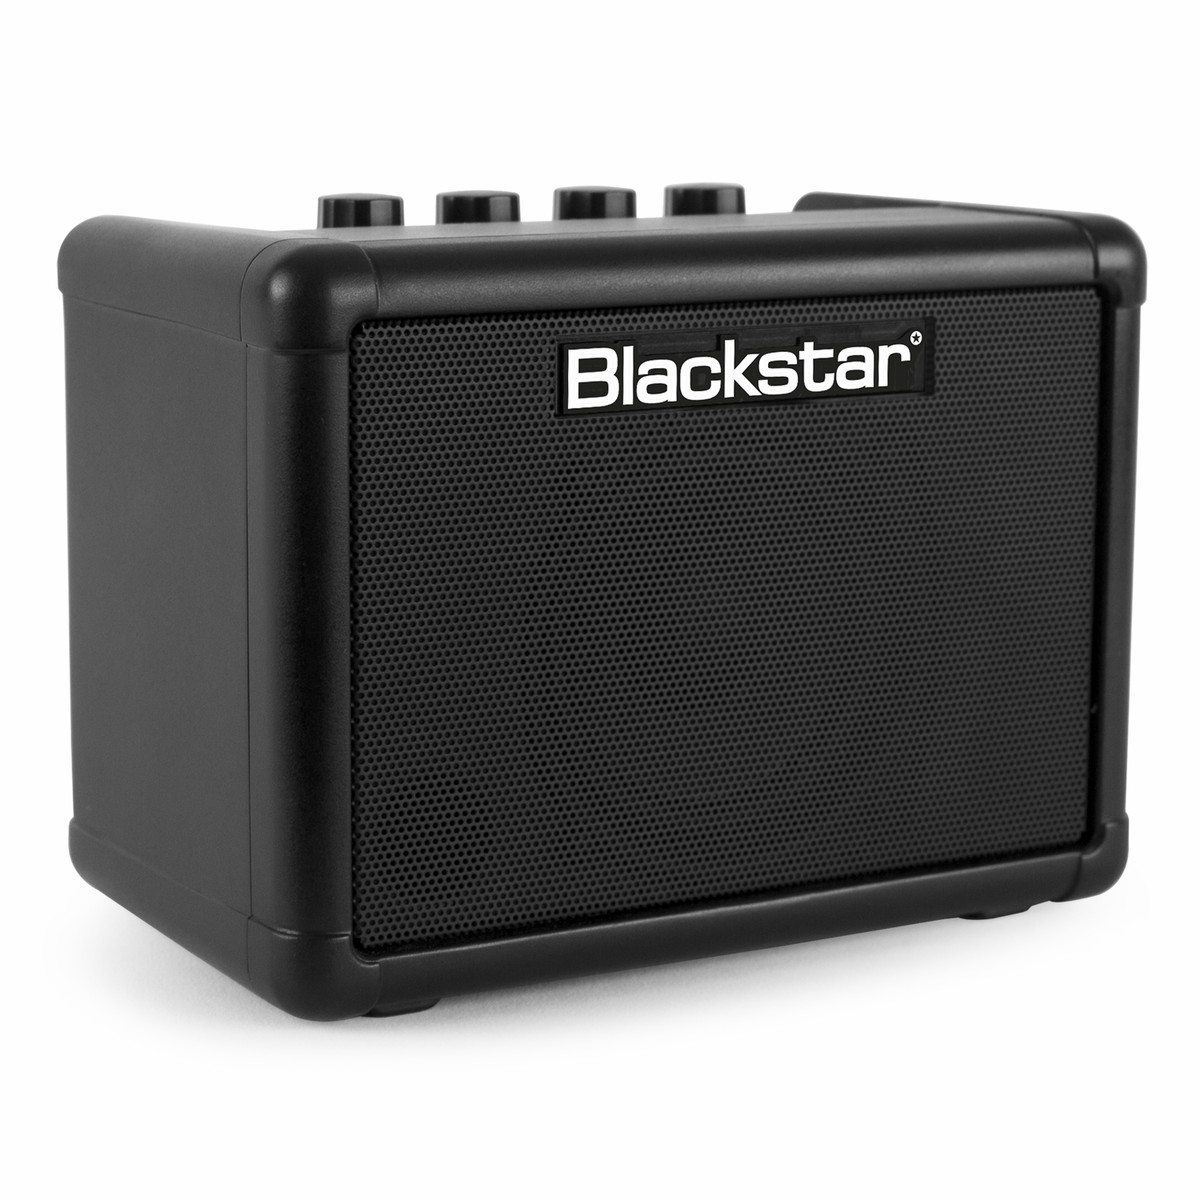 Blackstar FLY 3 Mini Amp